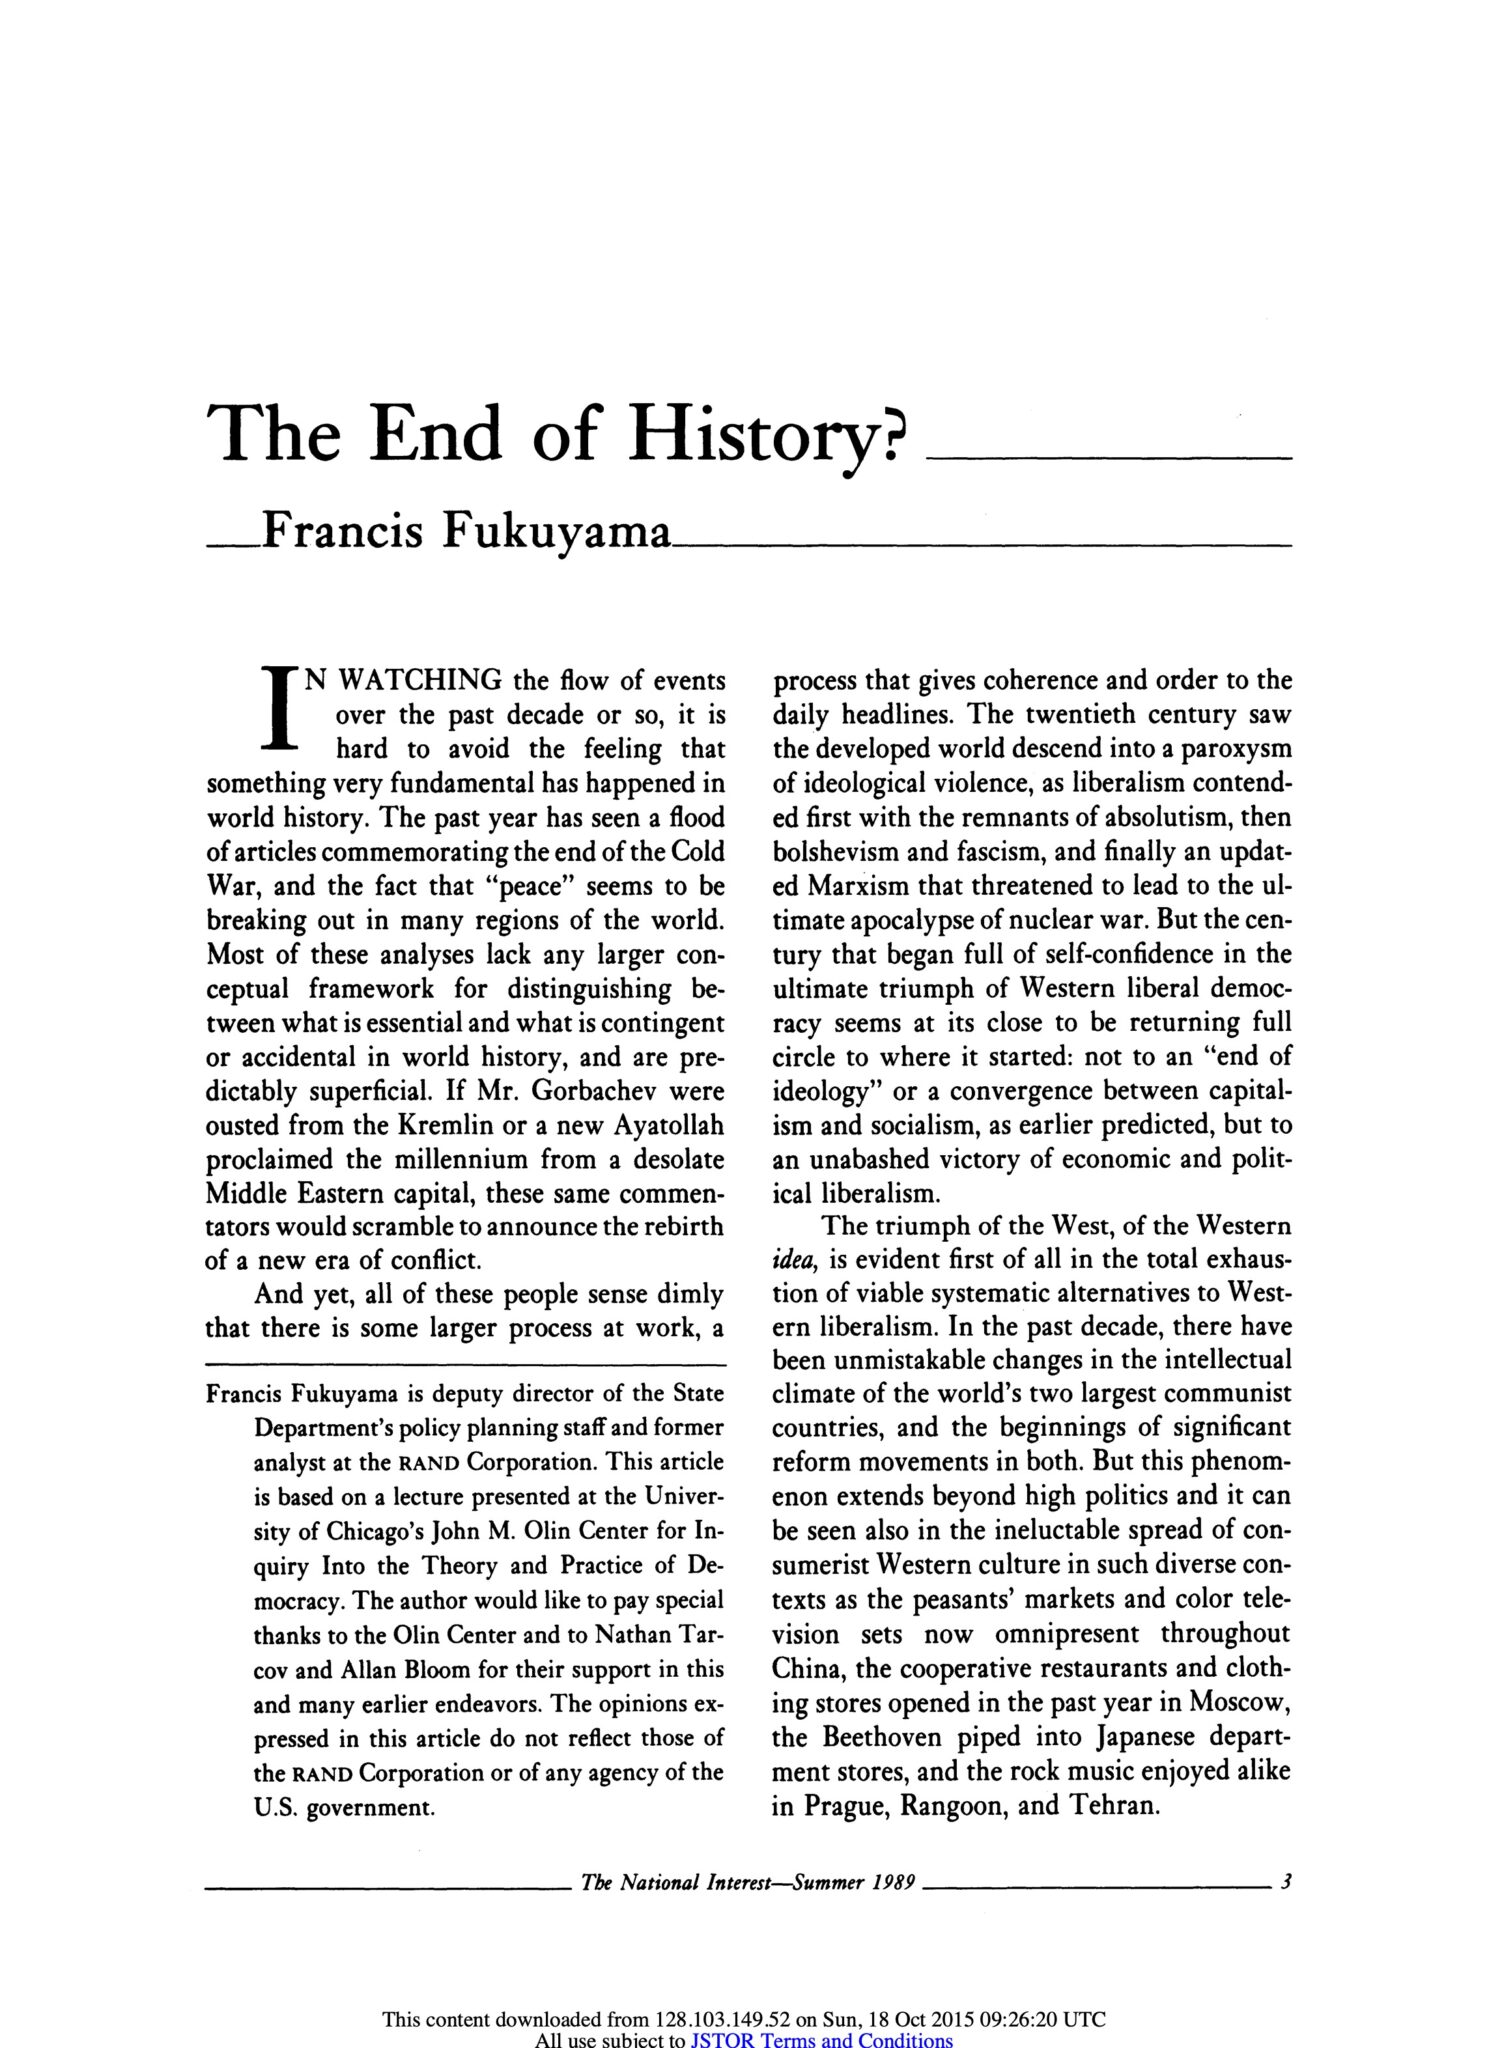 francis fukuyama the end of history essay